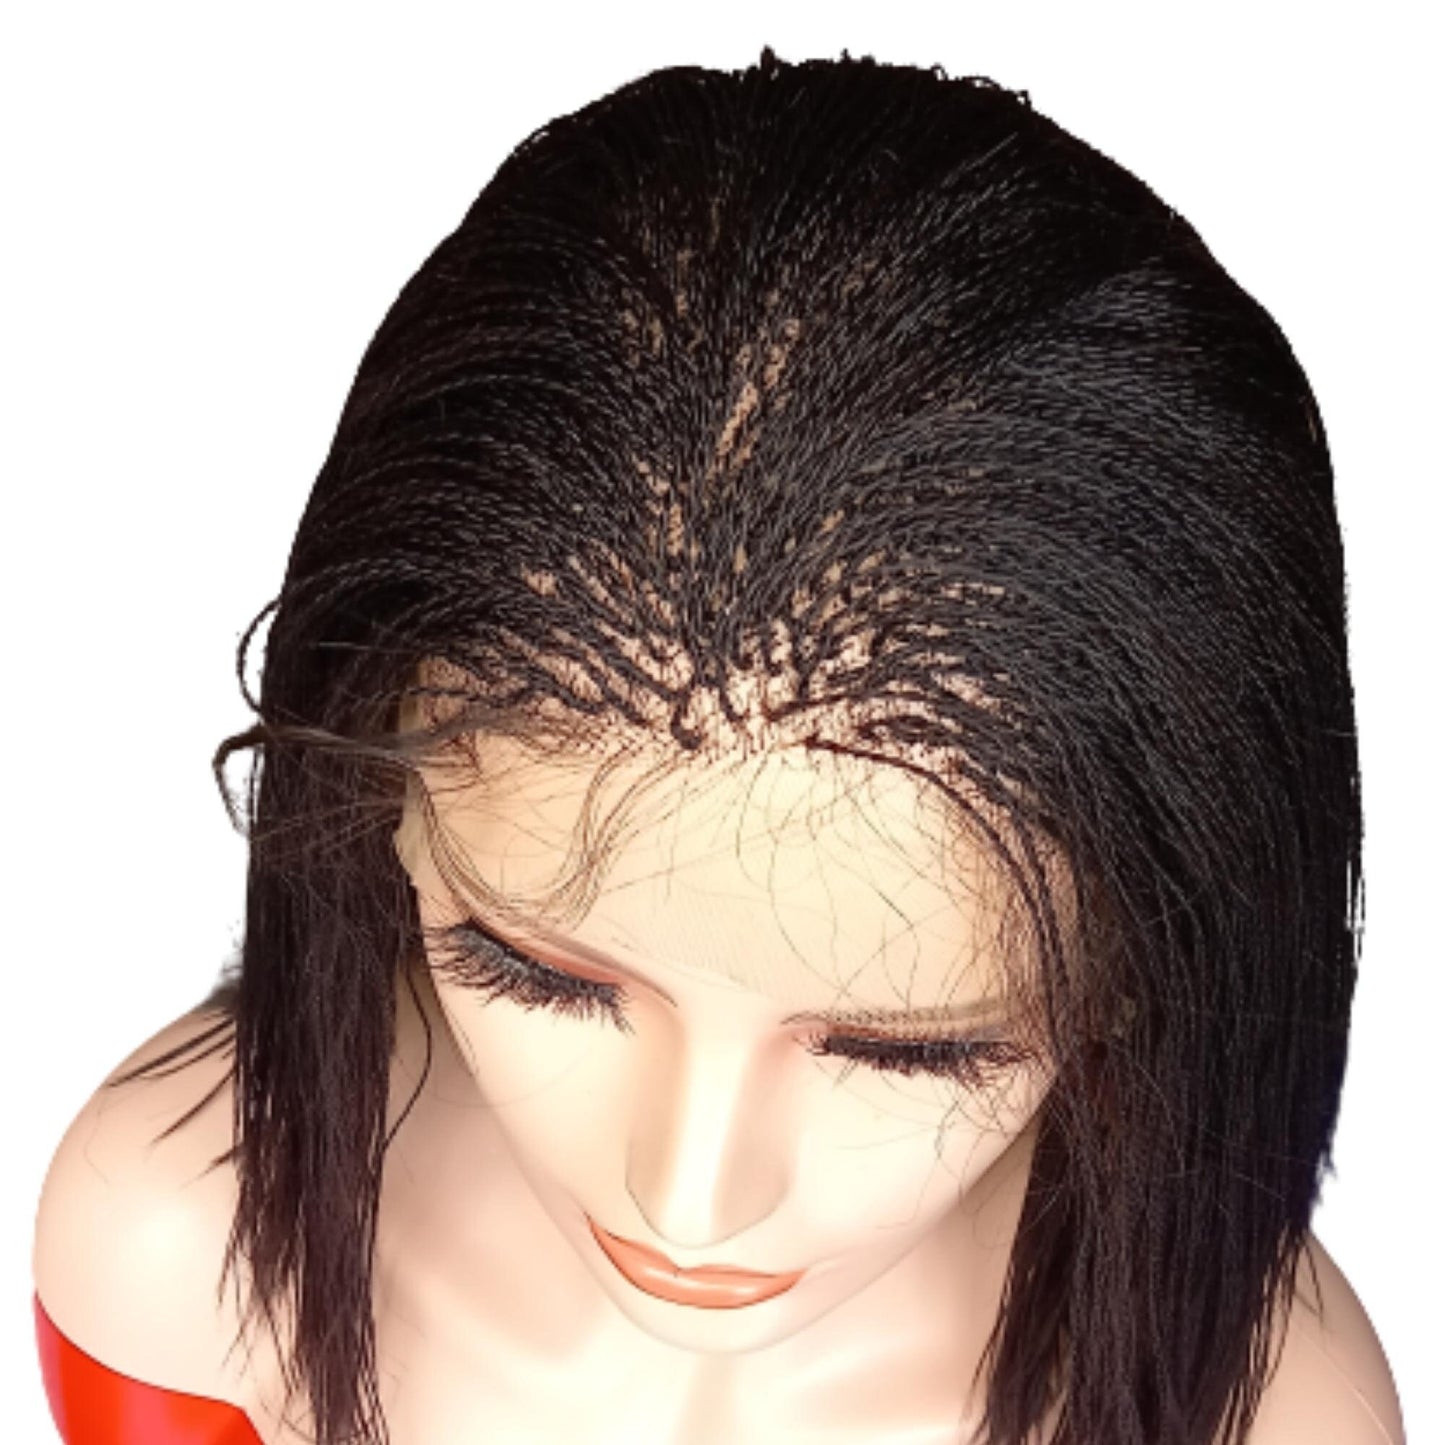 2 in 1 set of braided wig, micro braid wig, knotless braid wig, braid wig, box braid wig, box braided wig, braided wigs for black women - BRAIDED WIG BOSS